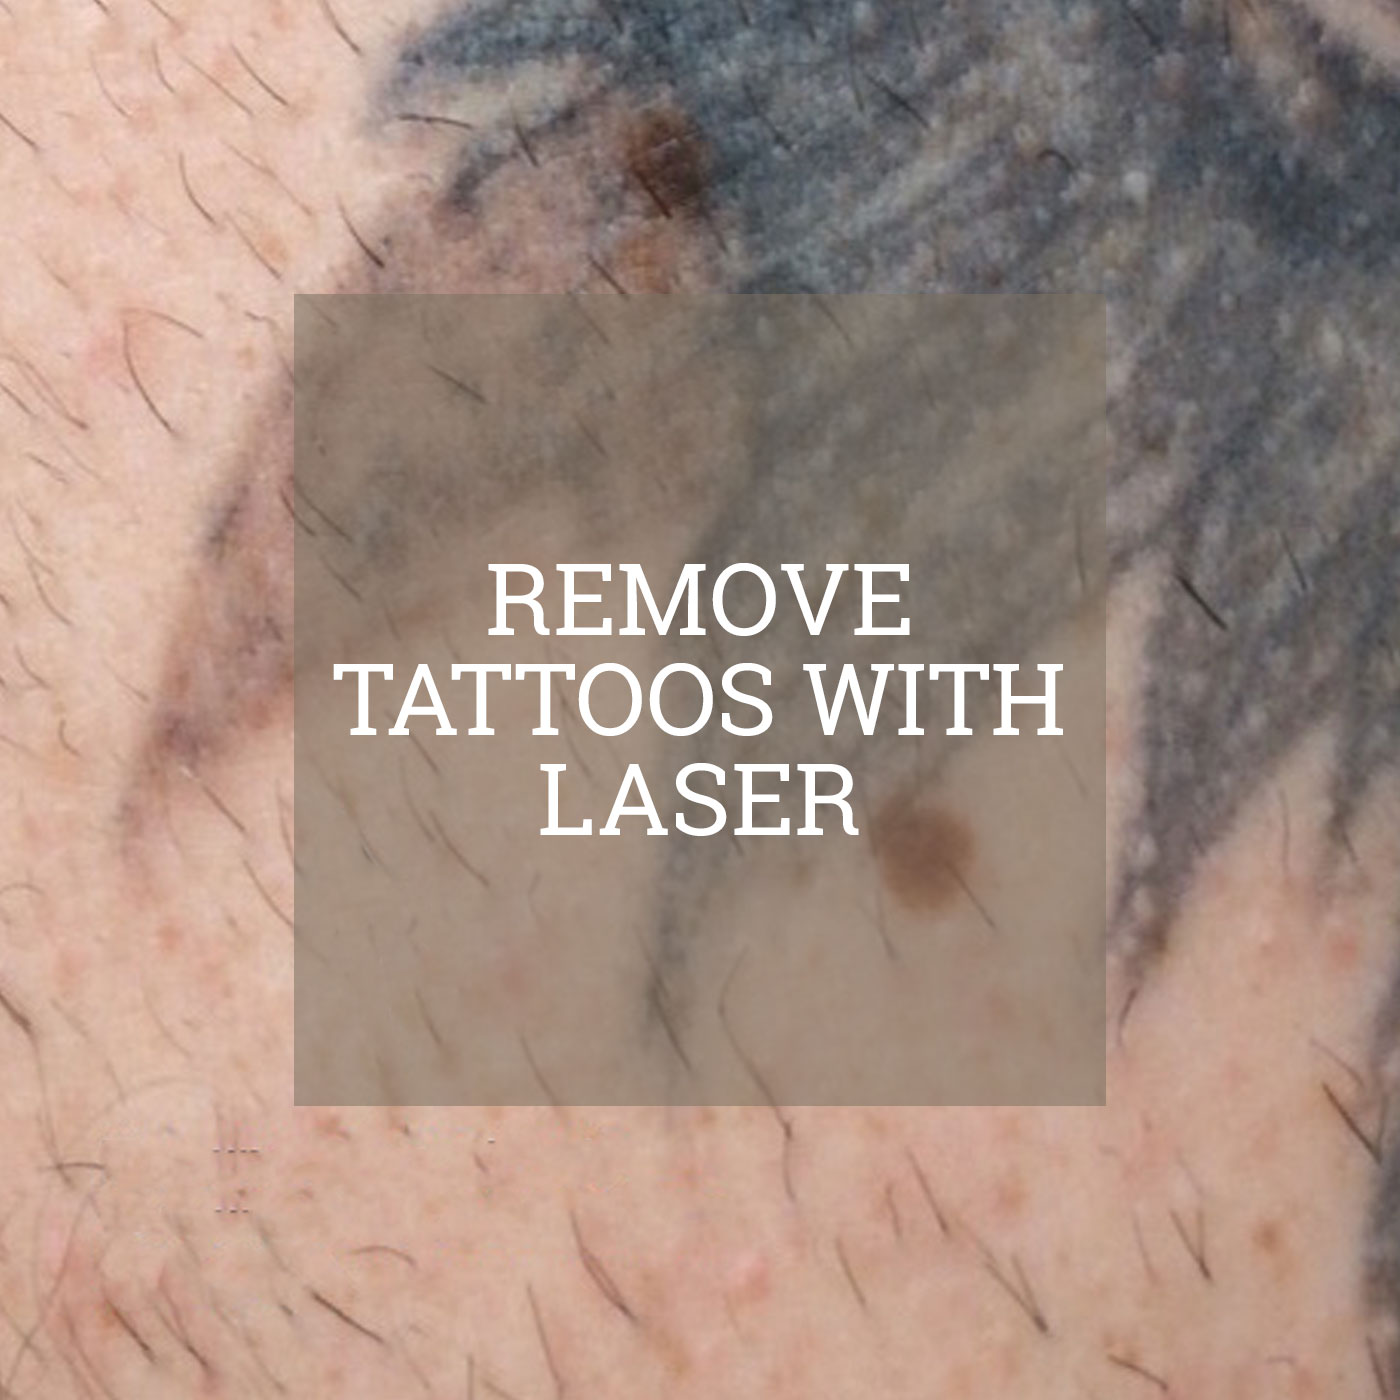 Remove tattoos with laser - Epidermos Instituto de dermoestética